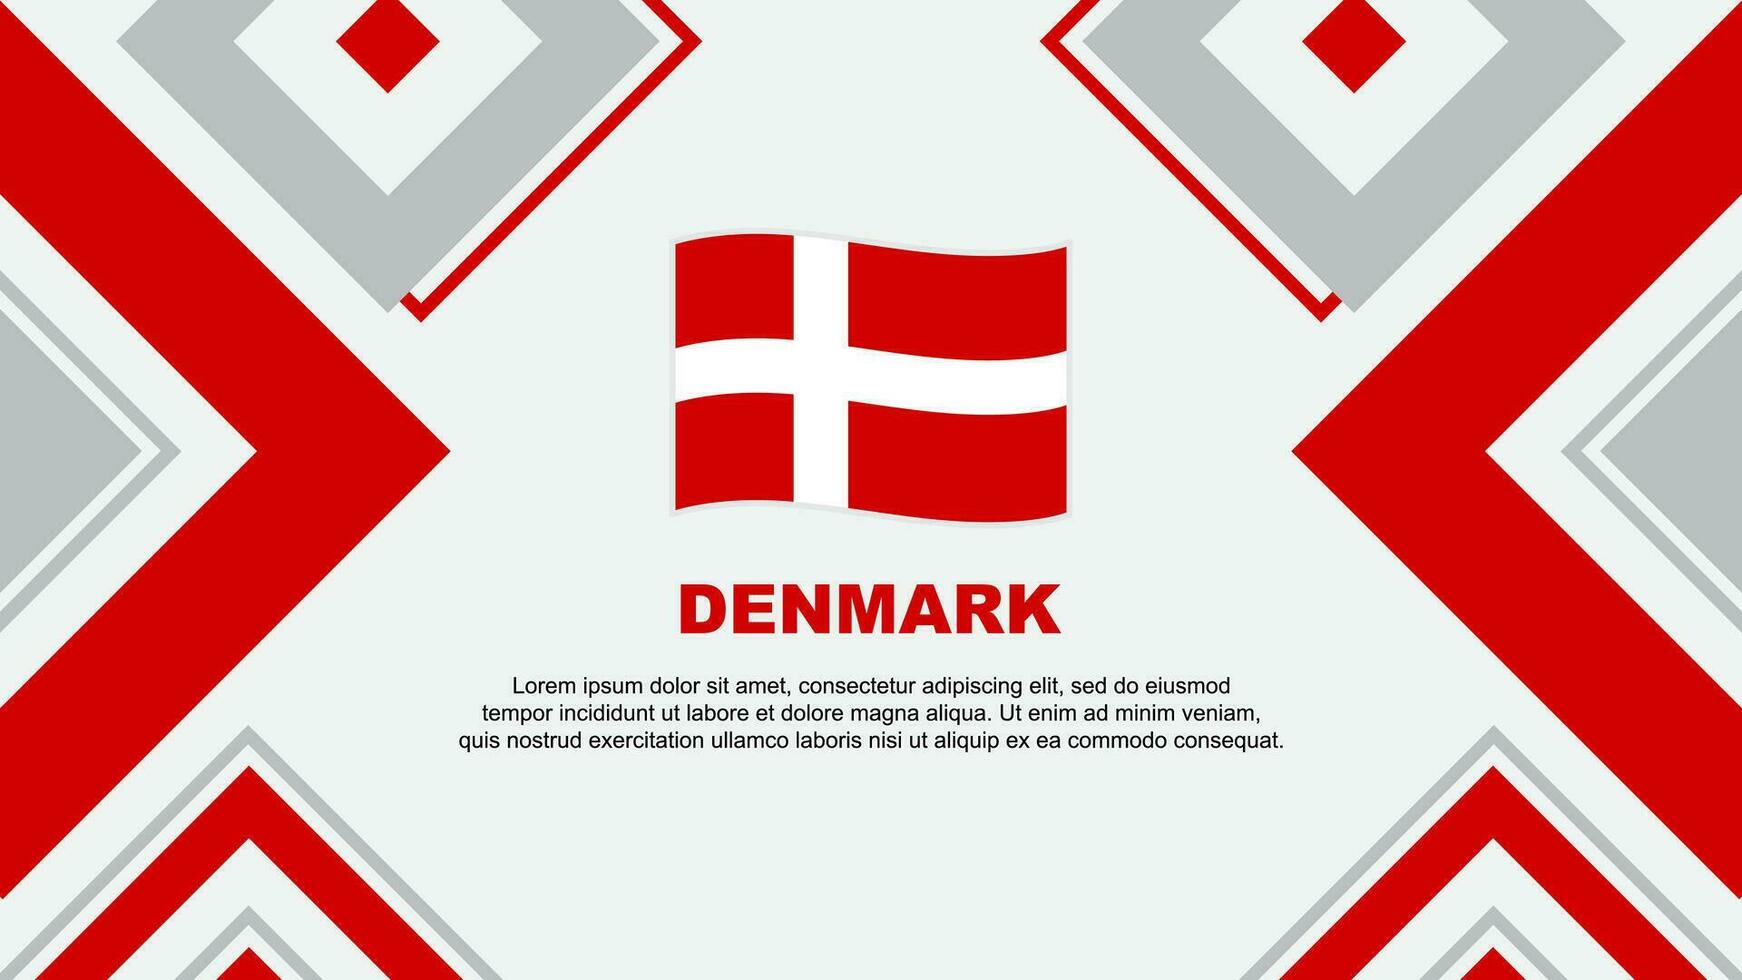 Denmark Flag Abstract Background Design Template. Denmark Independence Day Banner Wallpaper Vector Illustration. Denmark Independence Day